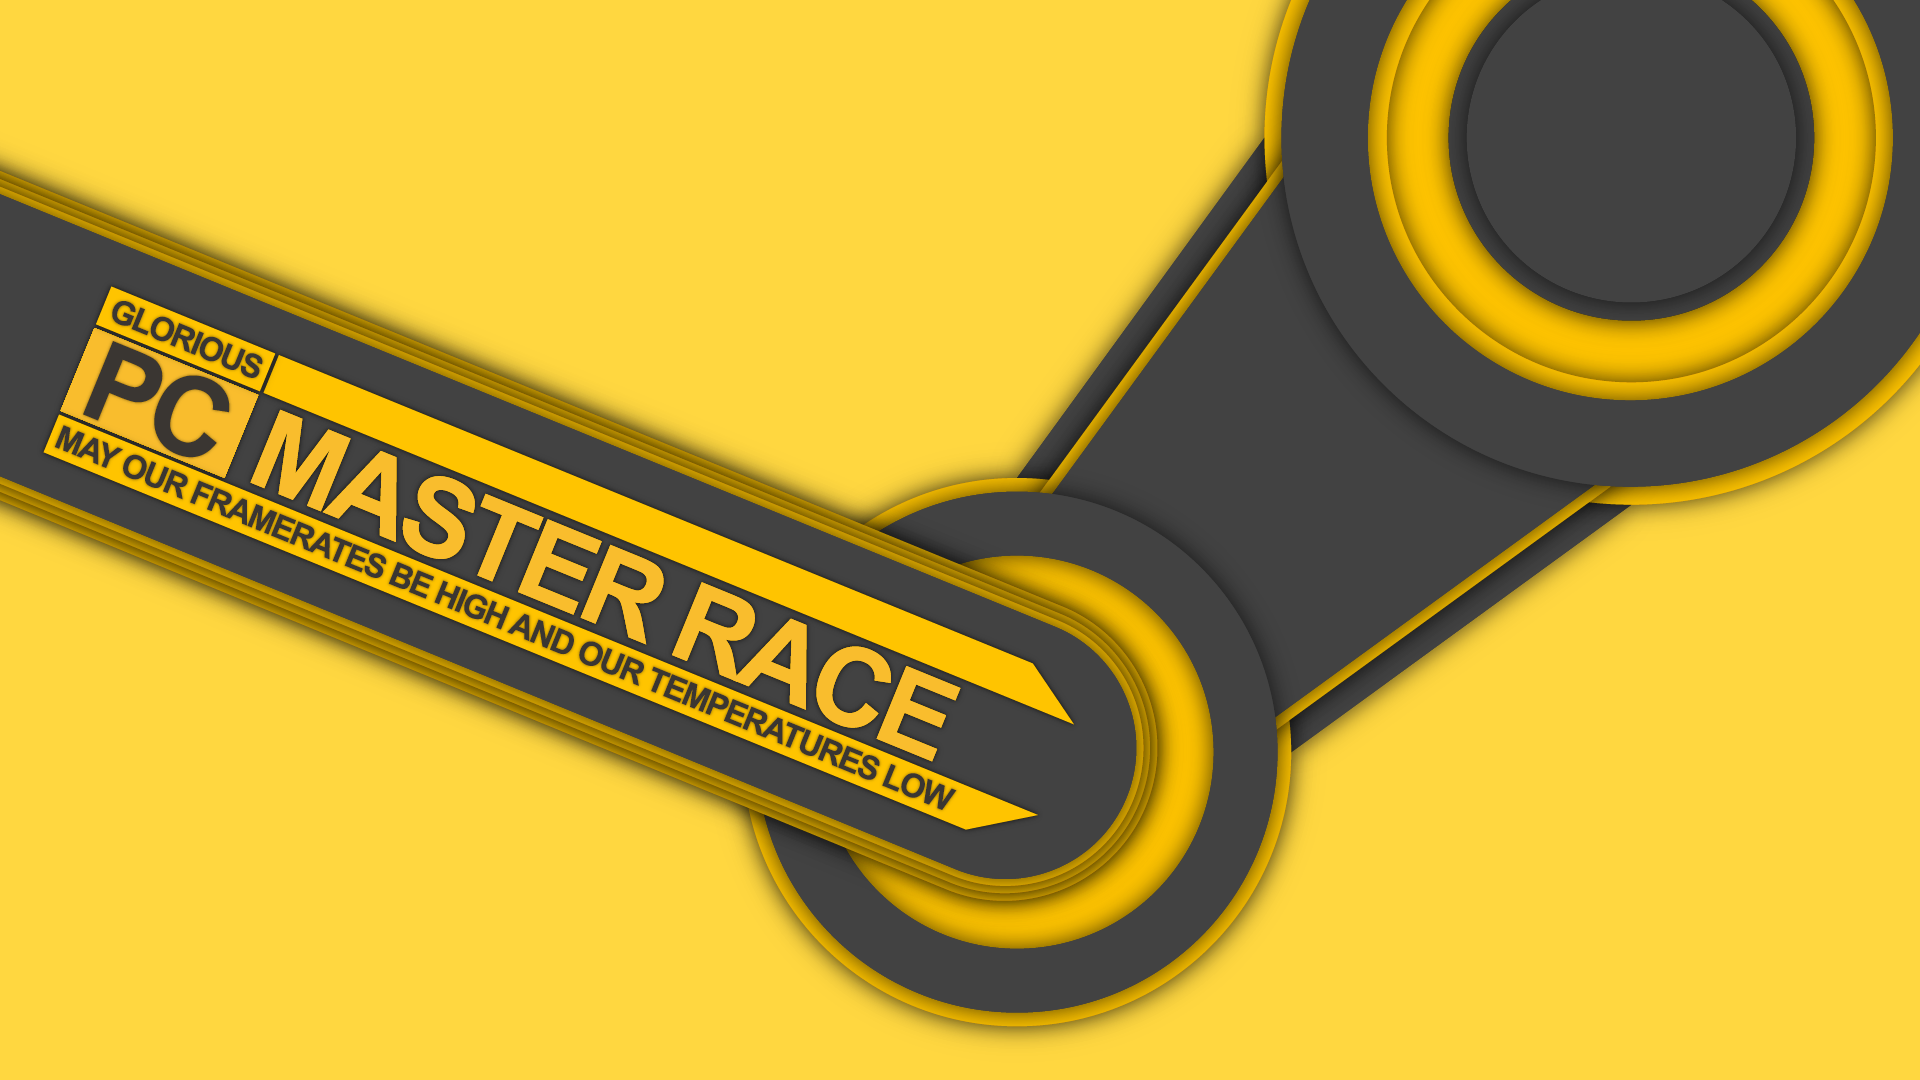 Pc Master Race Wallpaper Pixshark